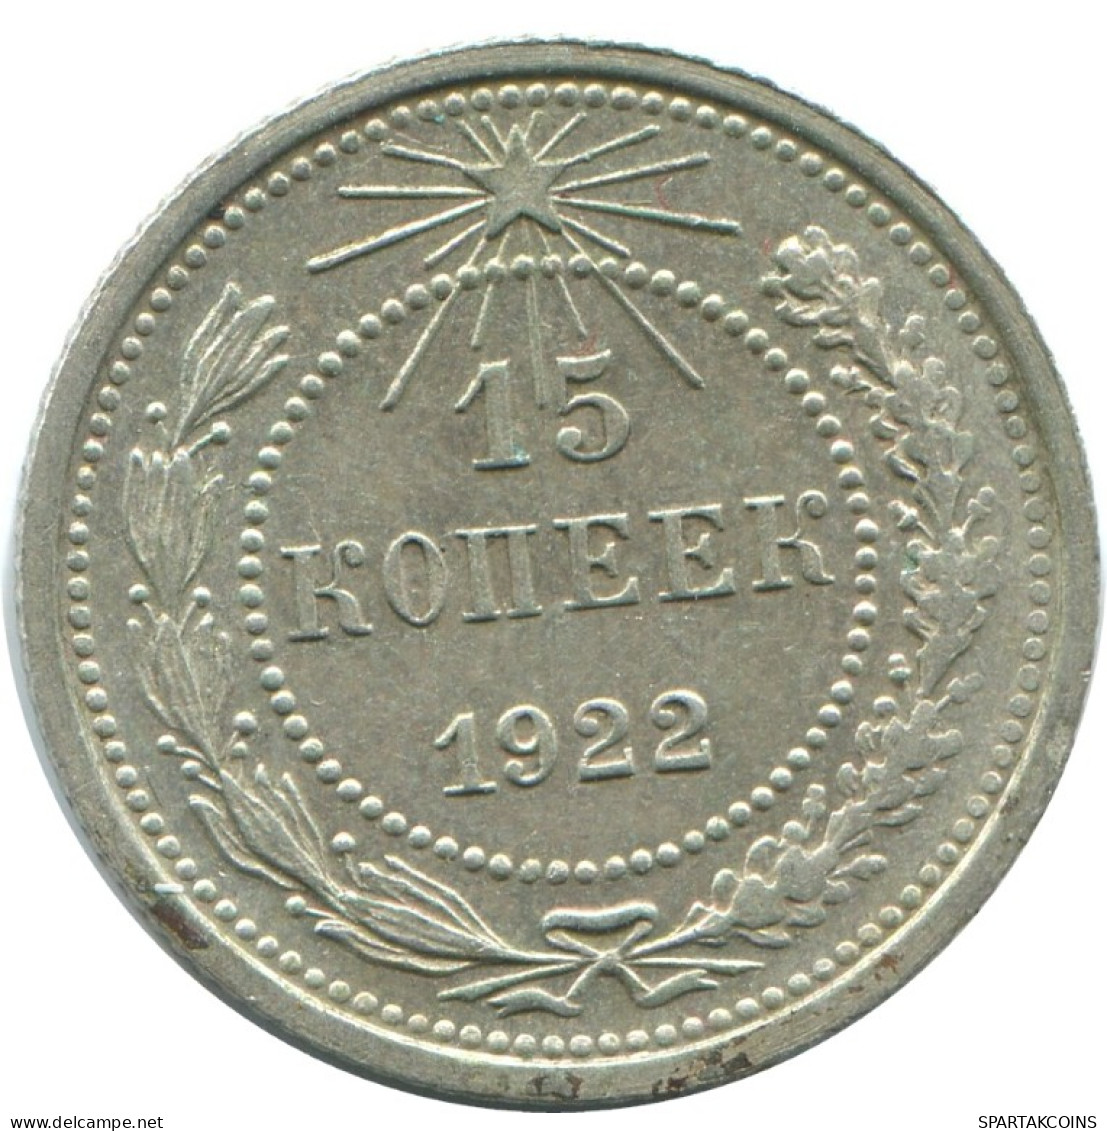 15 KOPEKS 1922 RUSSIA RSFSR SILVER Coin HIGH GRADE #AF204.4.U.A - Russia